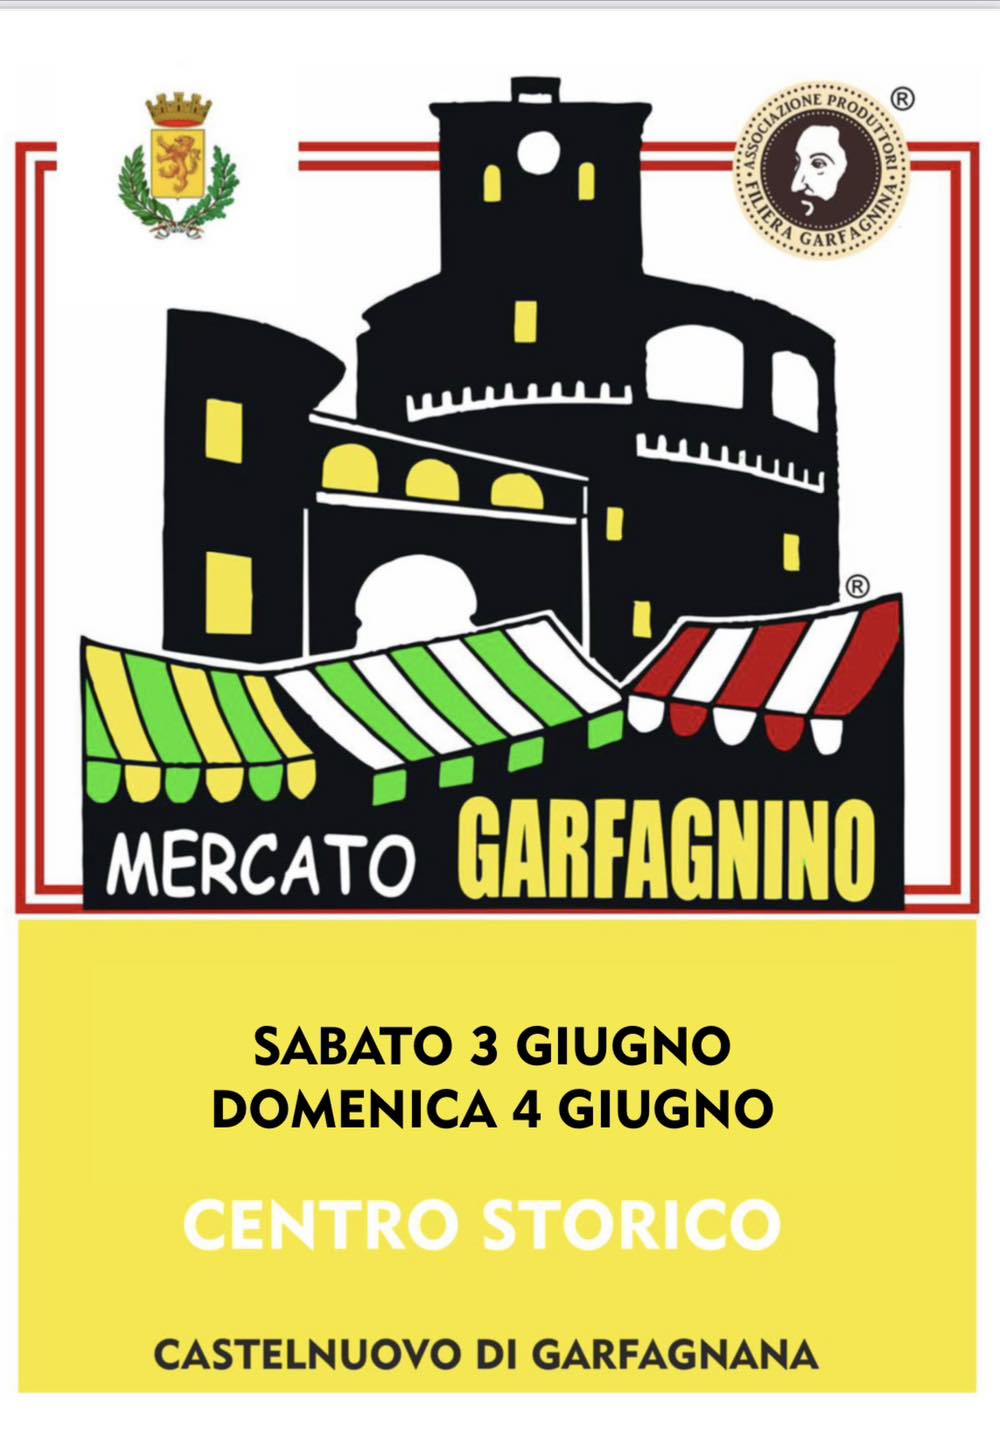 Mercato Garfagnino